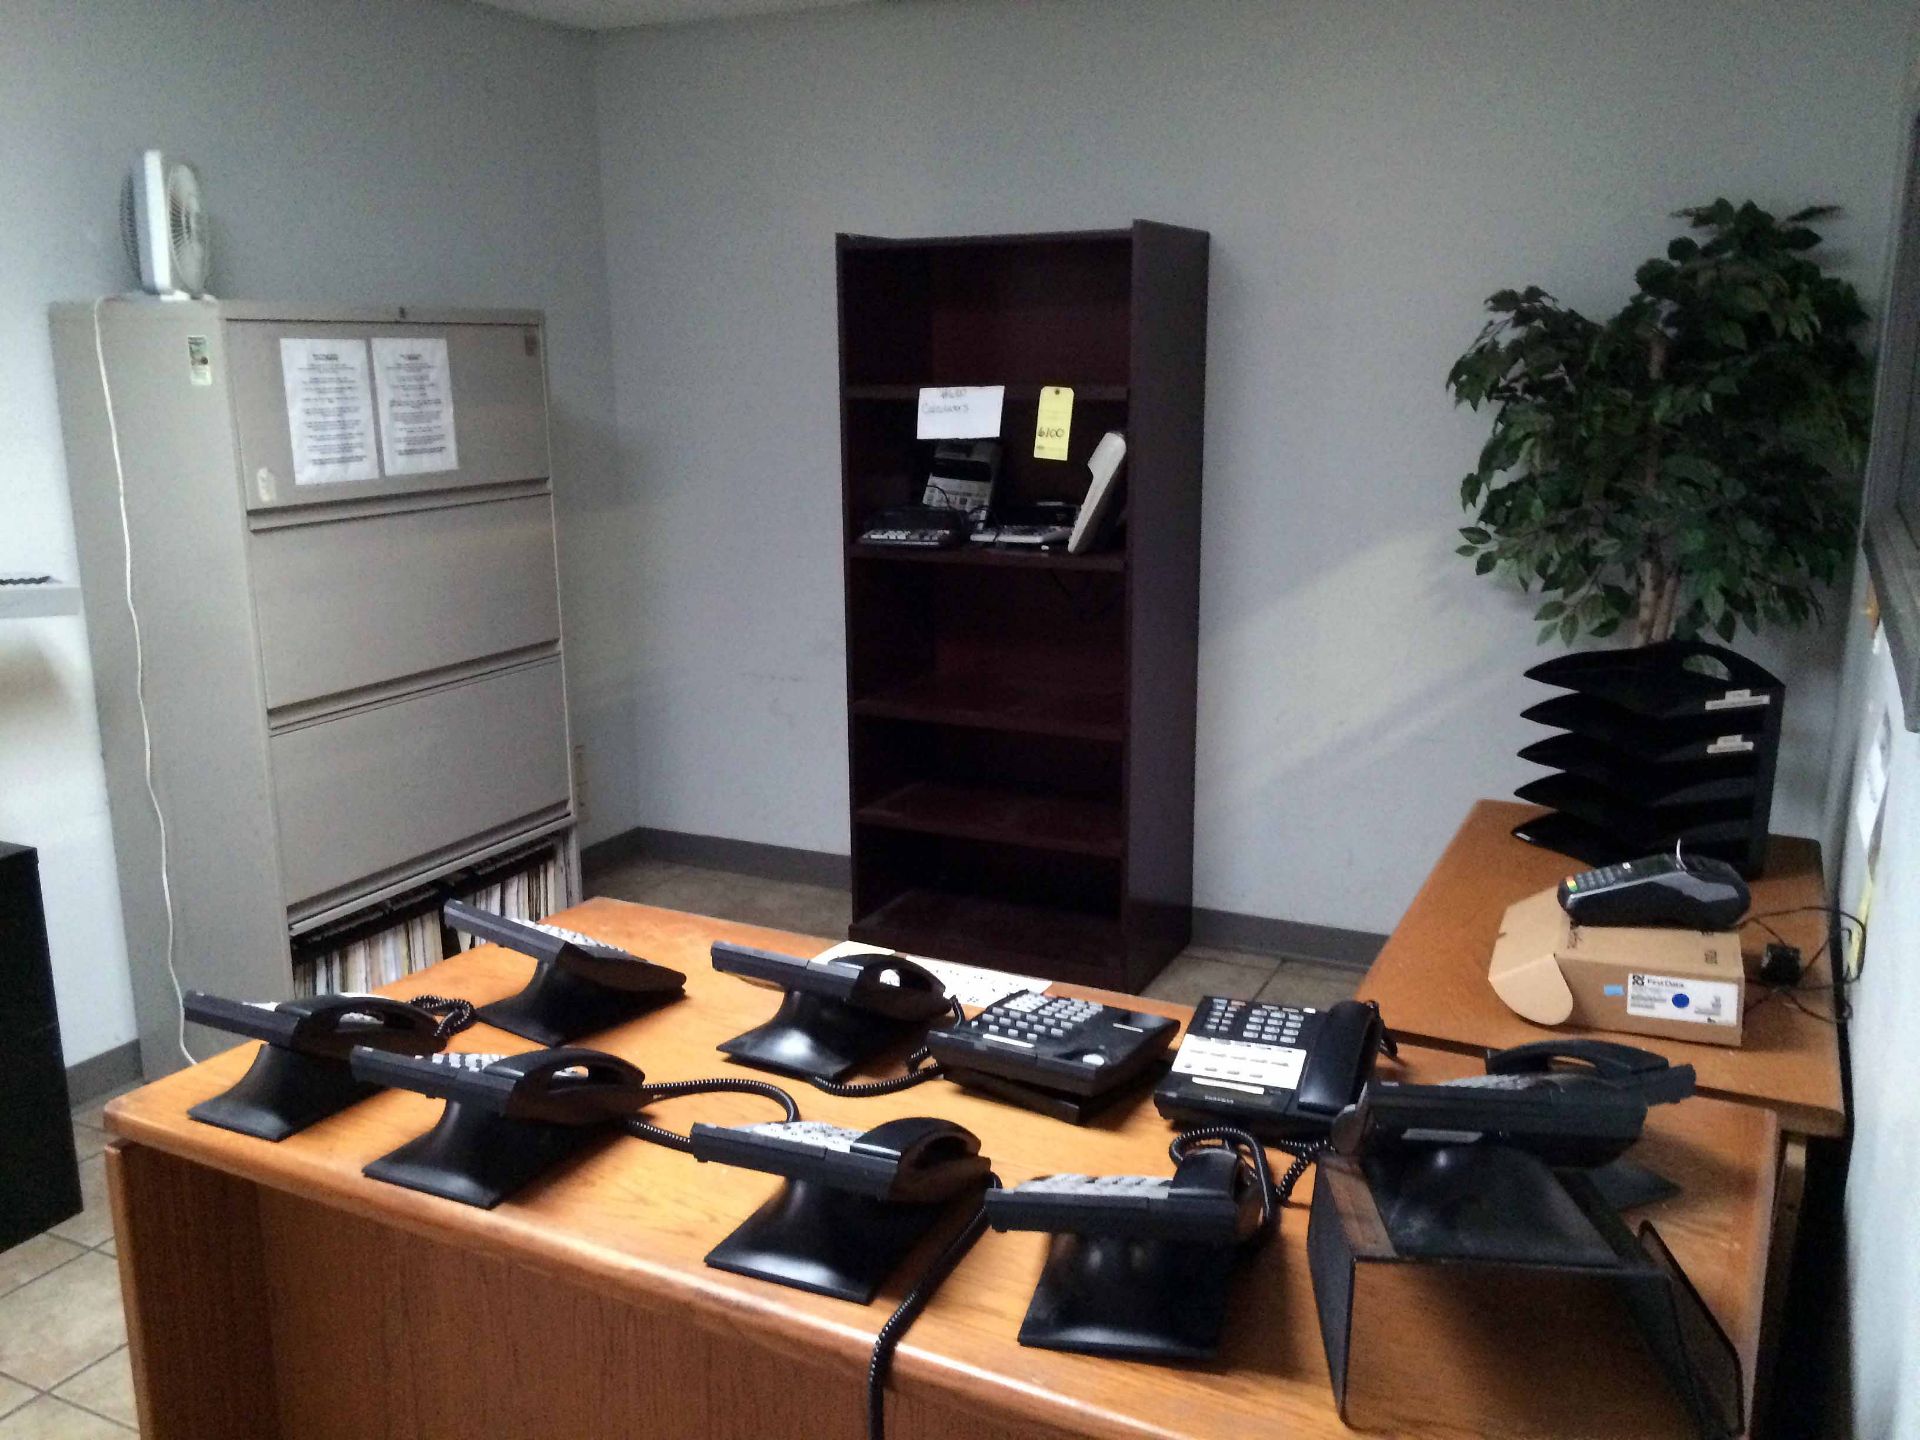 LOT OF OFFICE FURNITURE: desk w/leaf, filing cabinets (2), bookshelf, tree LOCATED IN LONGVIEW, TX